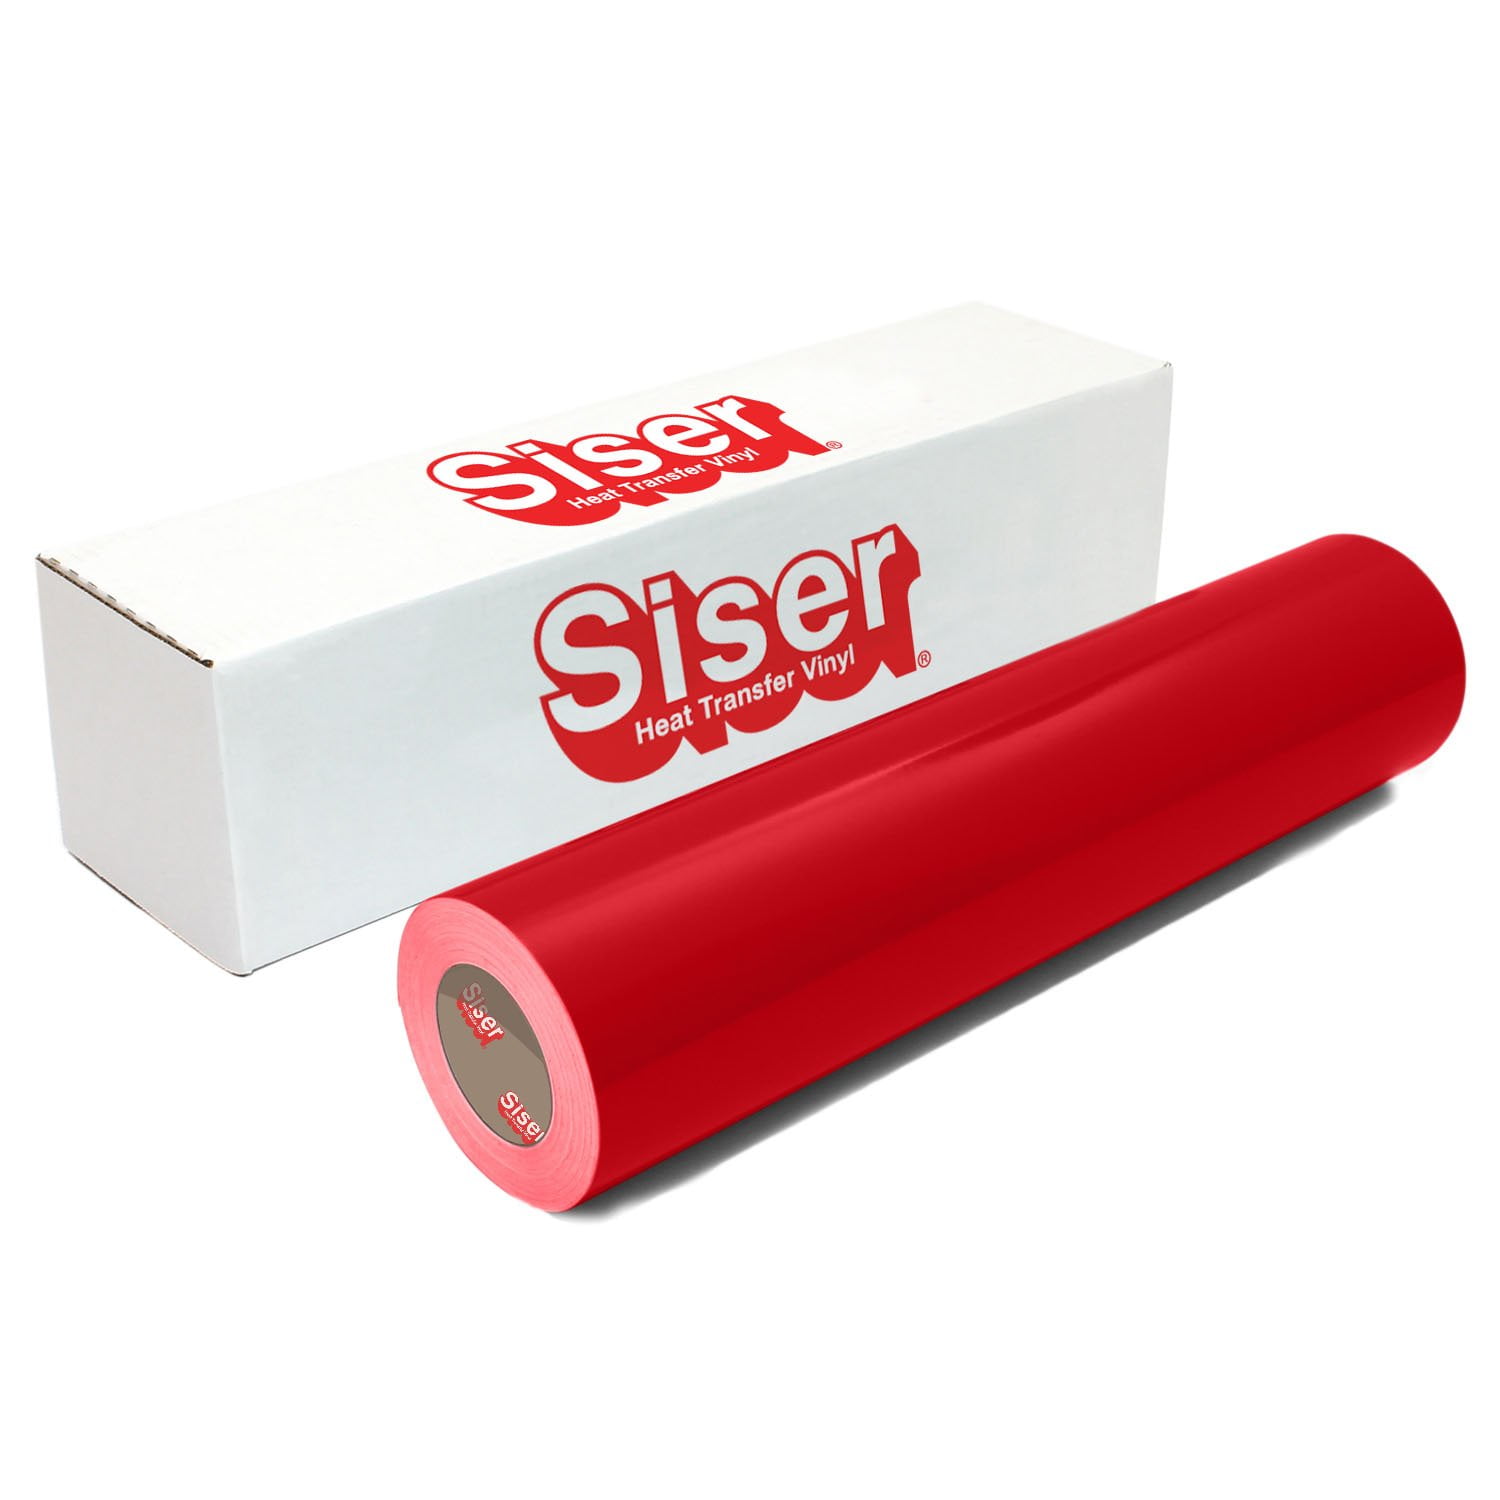 SISER HTV EasyWeed Heat Transfer Vinyl 12" x 5 FEET FOR T SHIRTS Free Shipping